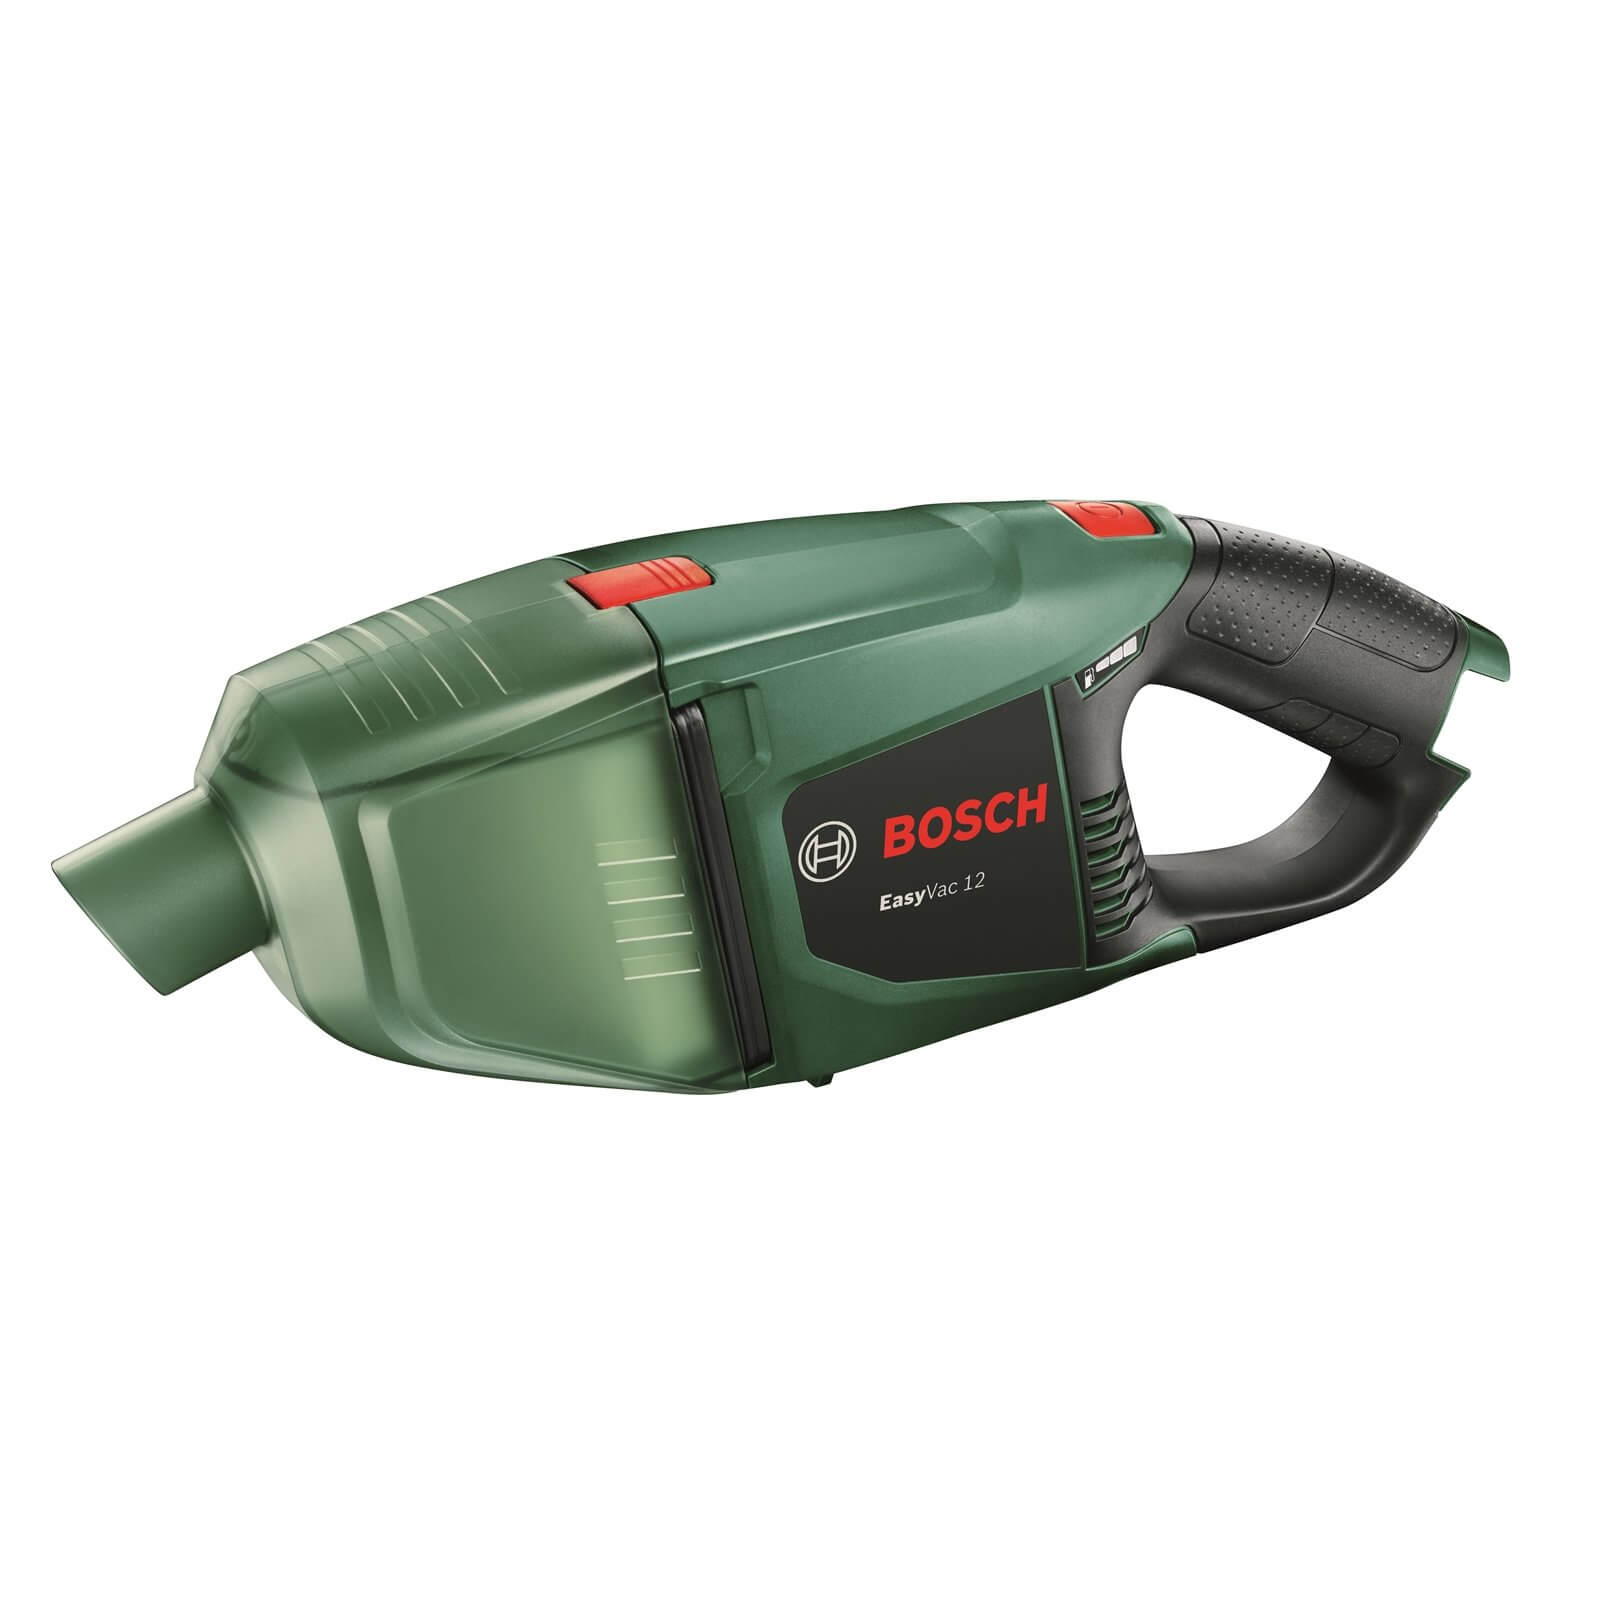 Photo of Bosch Easyvac 12 Cordless Vacuum Tool